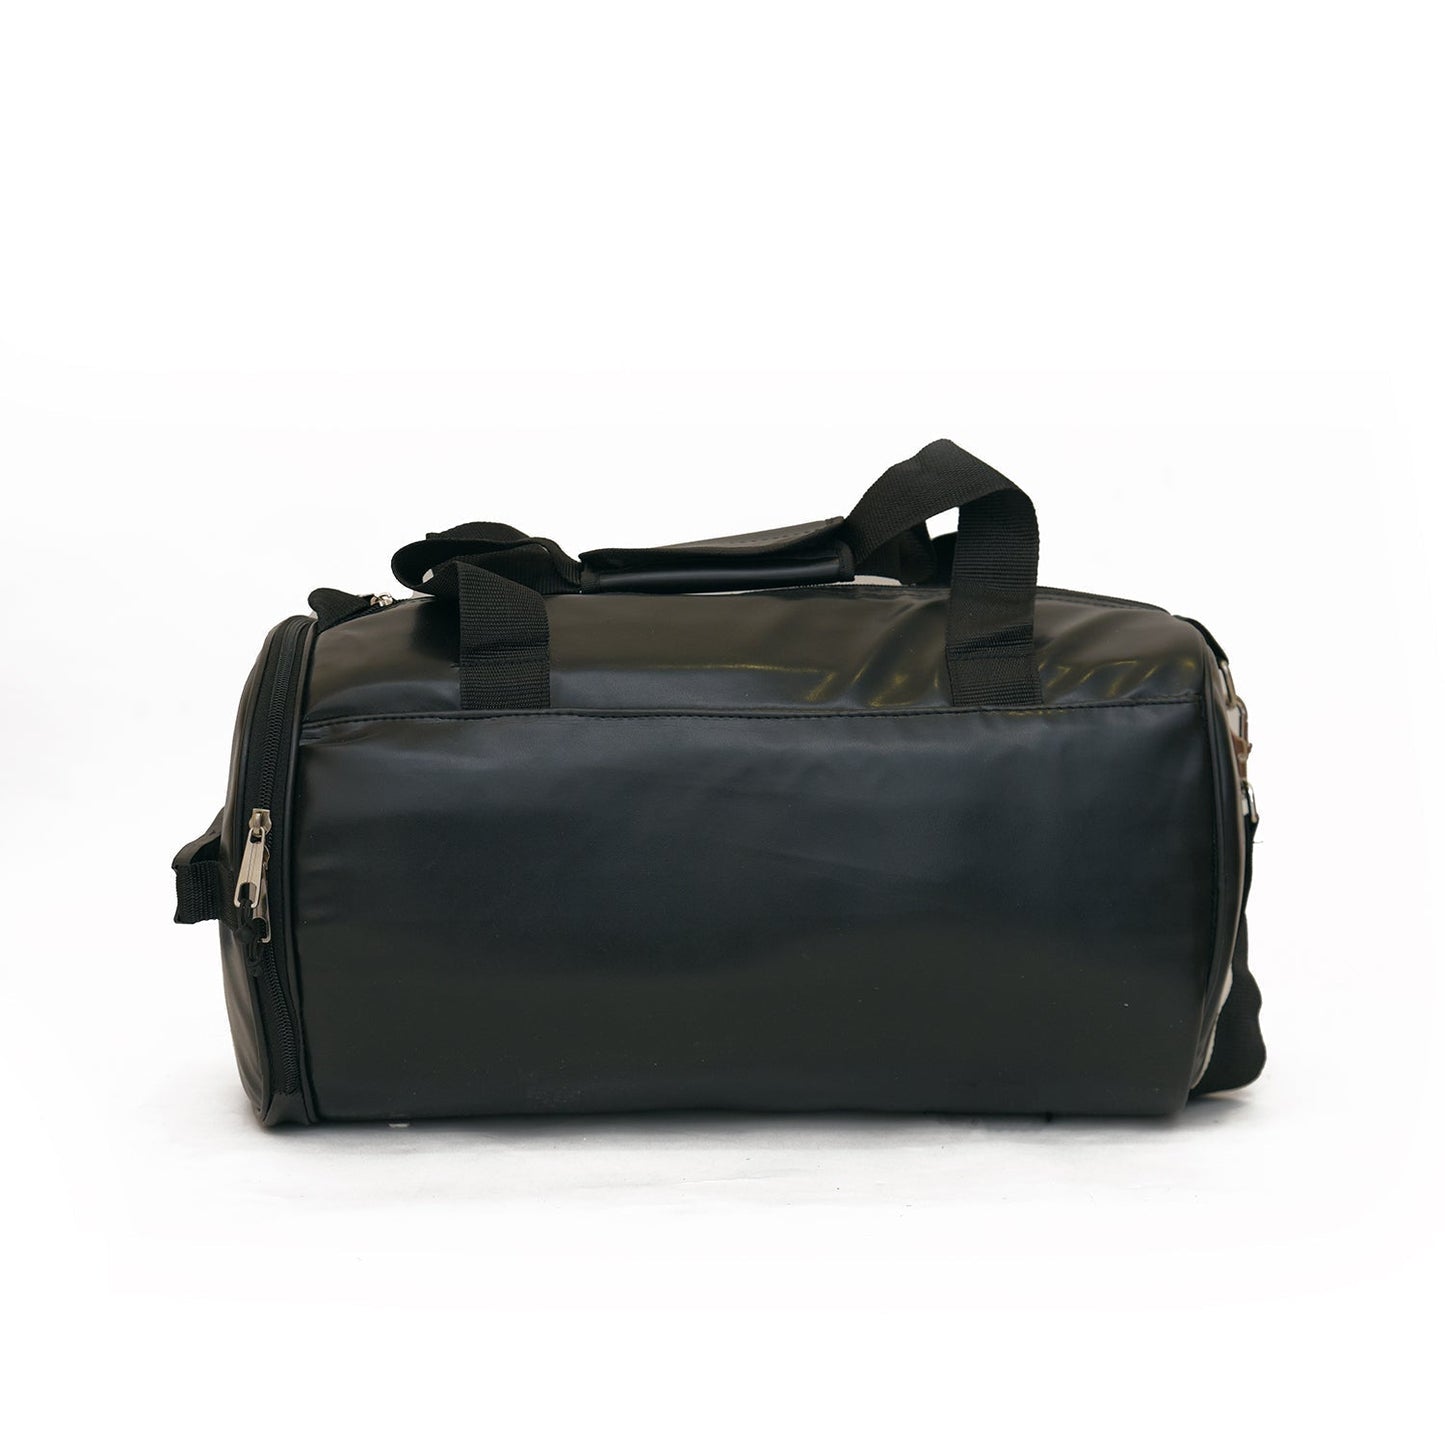 Zorro Duffel Bag Black (PU Leather)